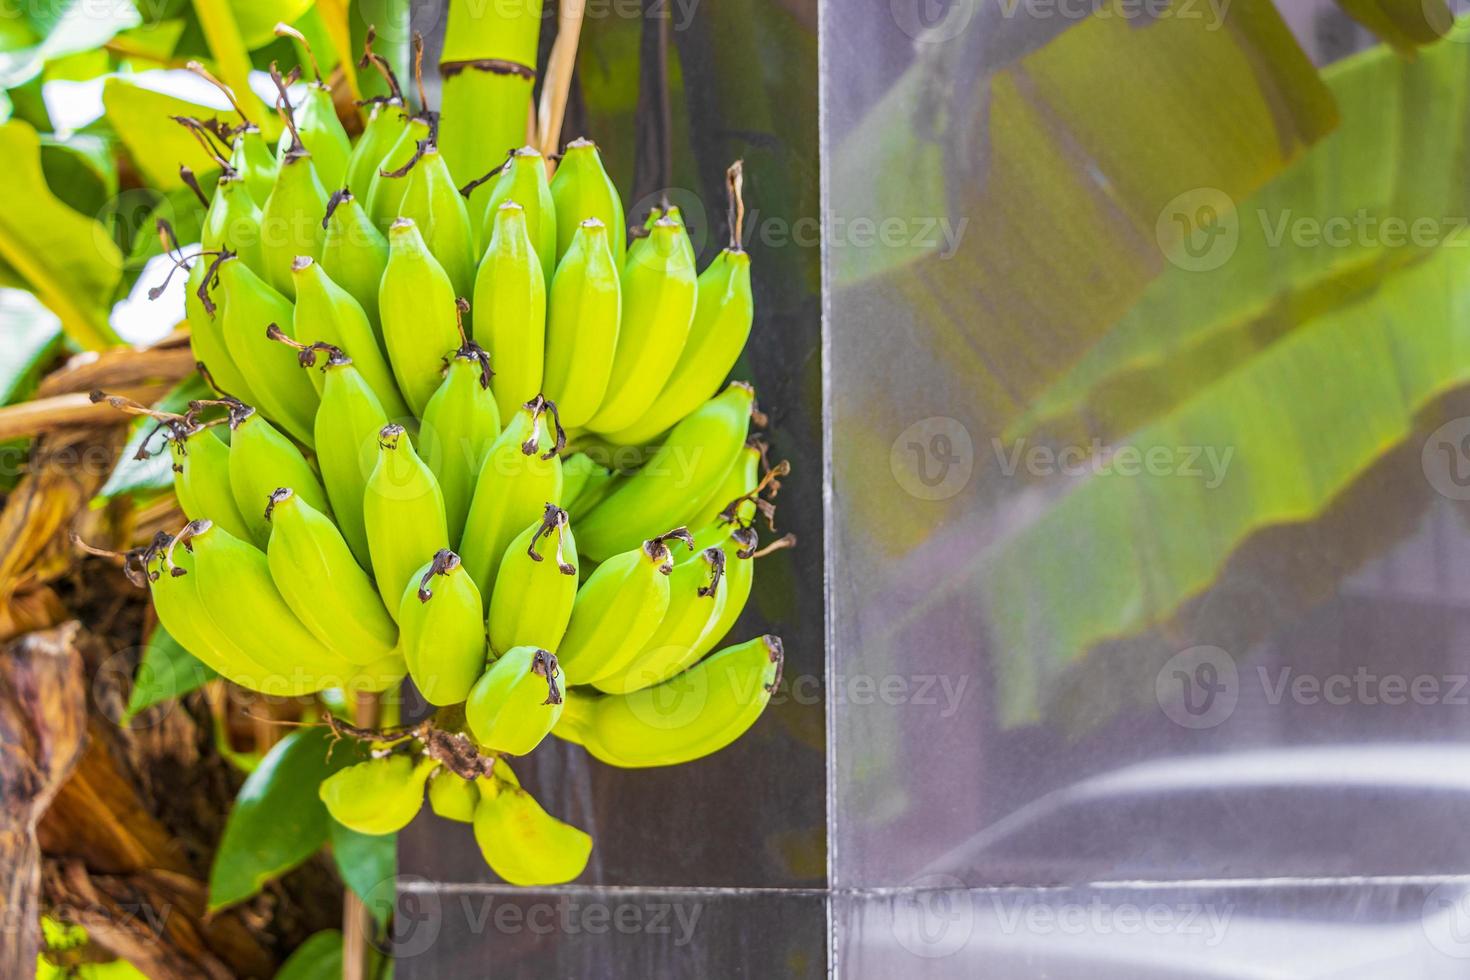 groengele bananen groeien op koh samui eiland thailand. foto